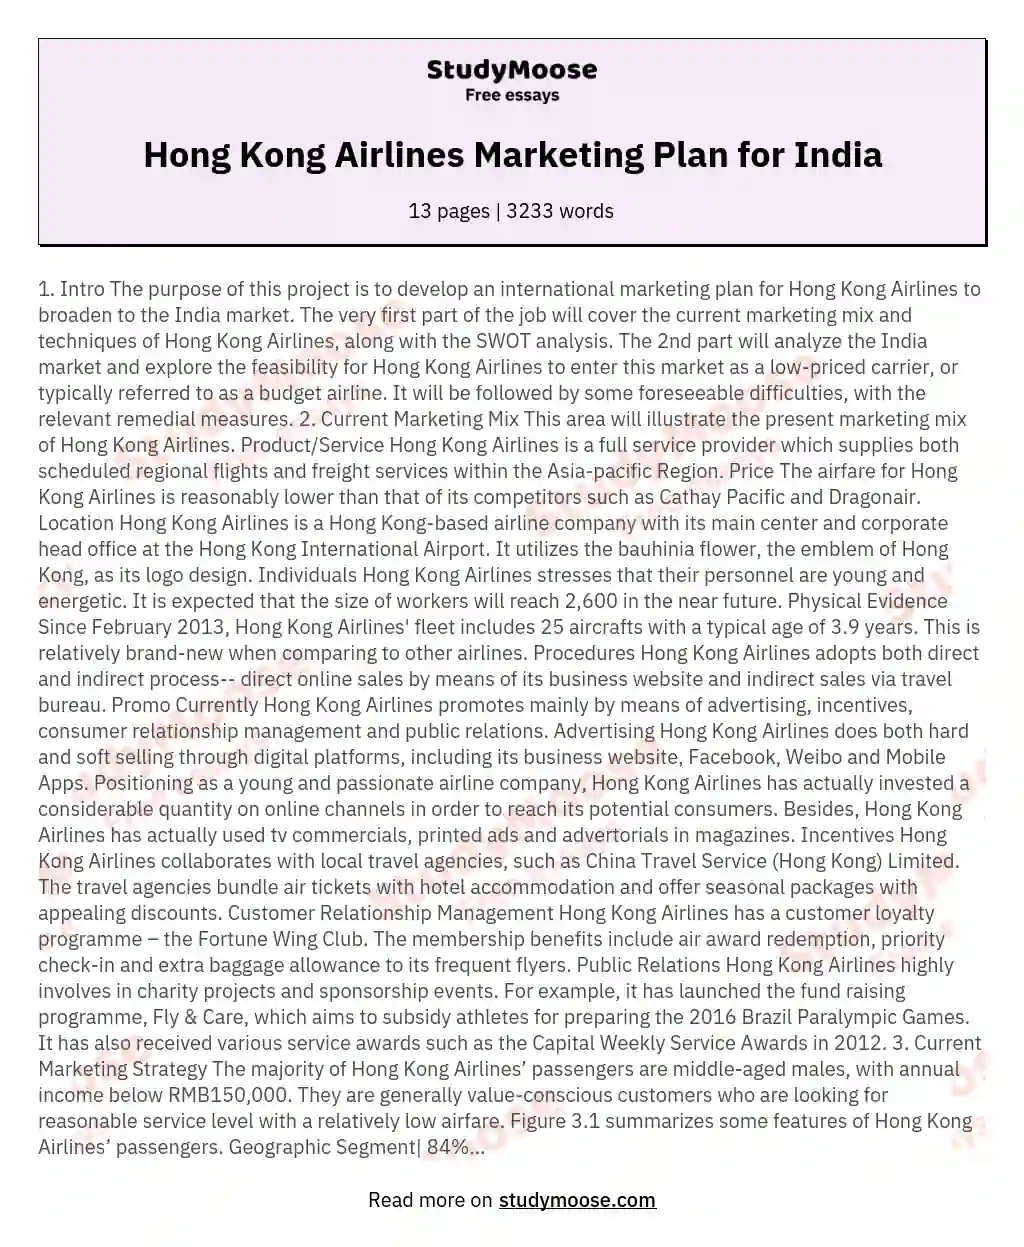 Hong Kong Airlines Marketing Plan for India